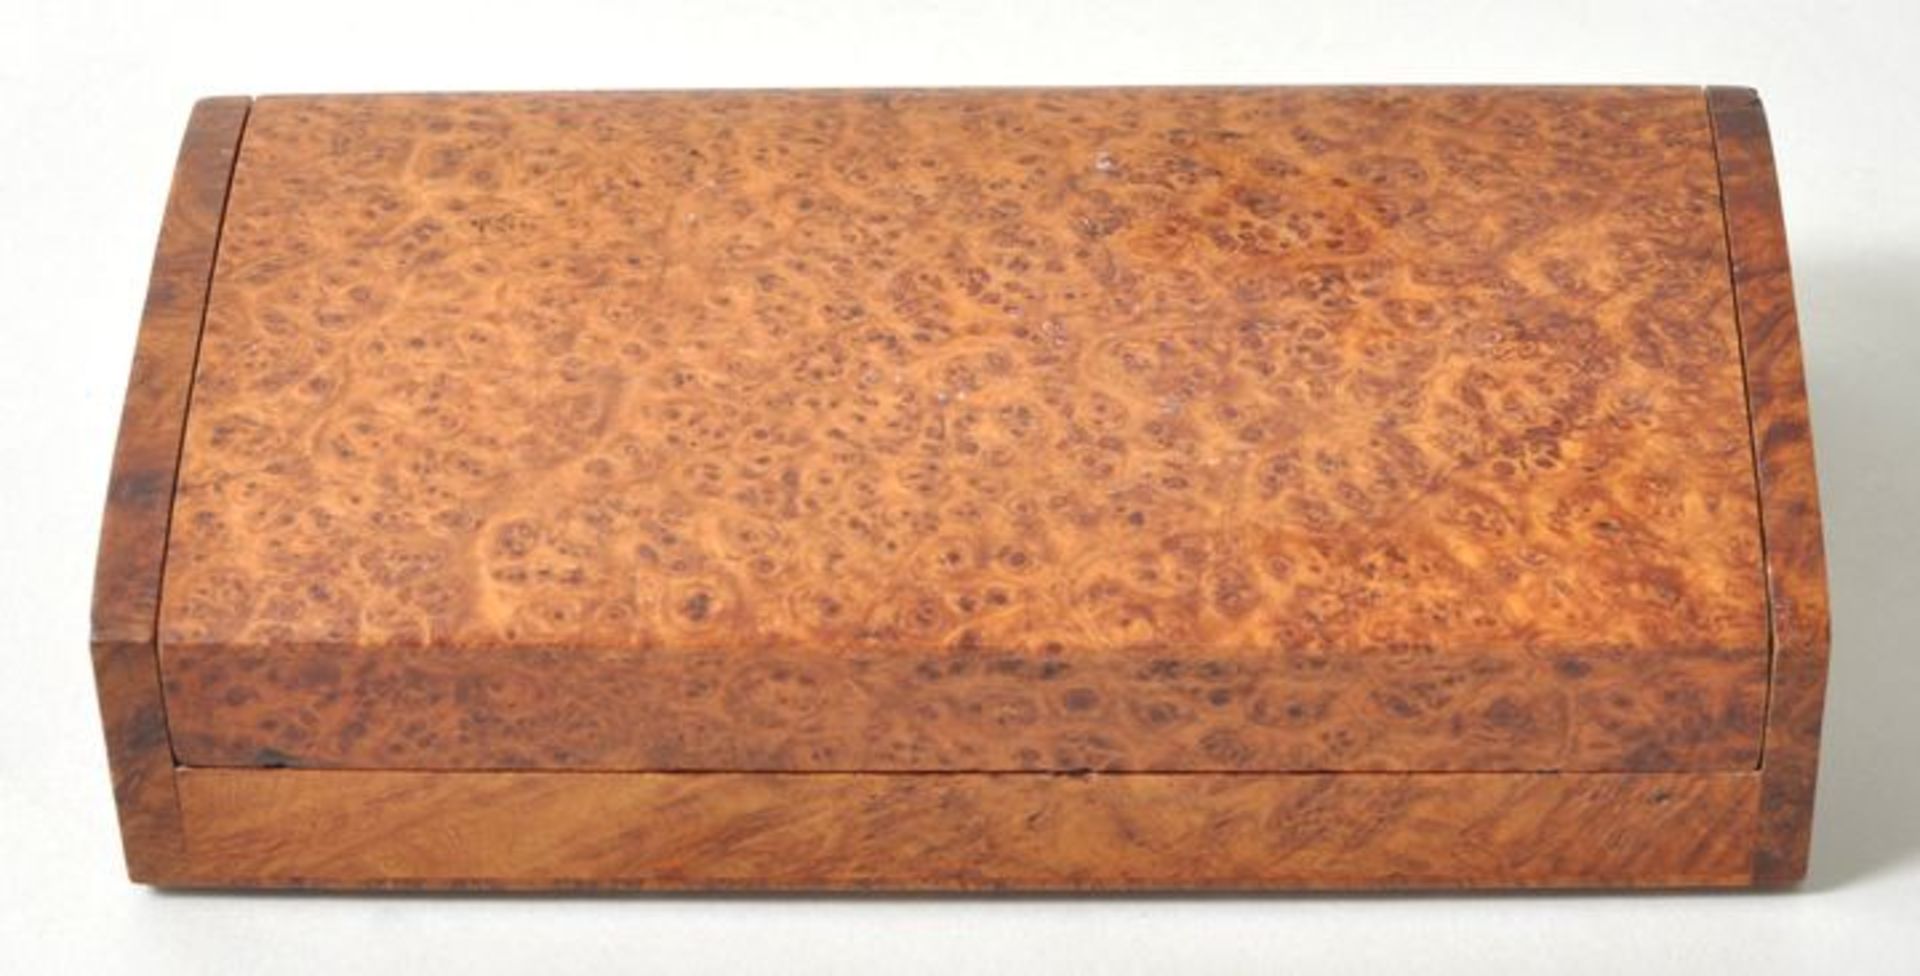 Holzschachtel/ Zigarrenschachtel, 20. Jh.Rötliches Wurzelholz. 4,5 x 18 x 9 cm- - -25.00 % buyer's